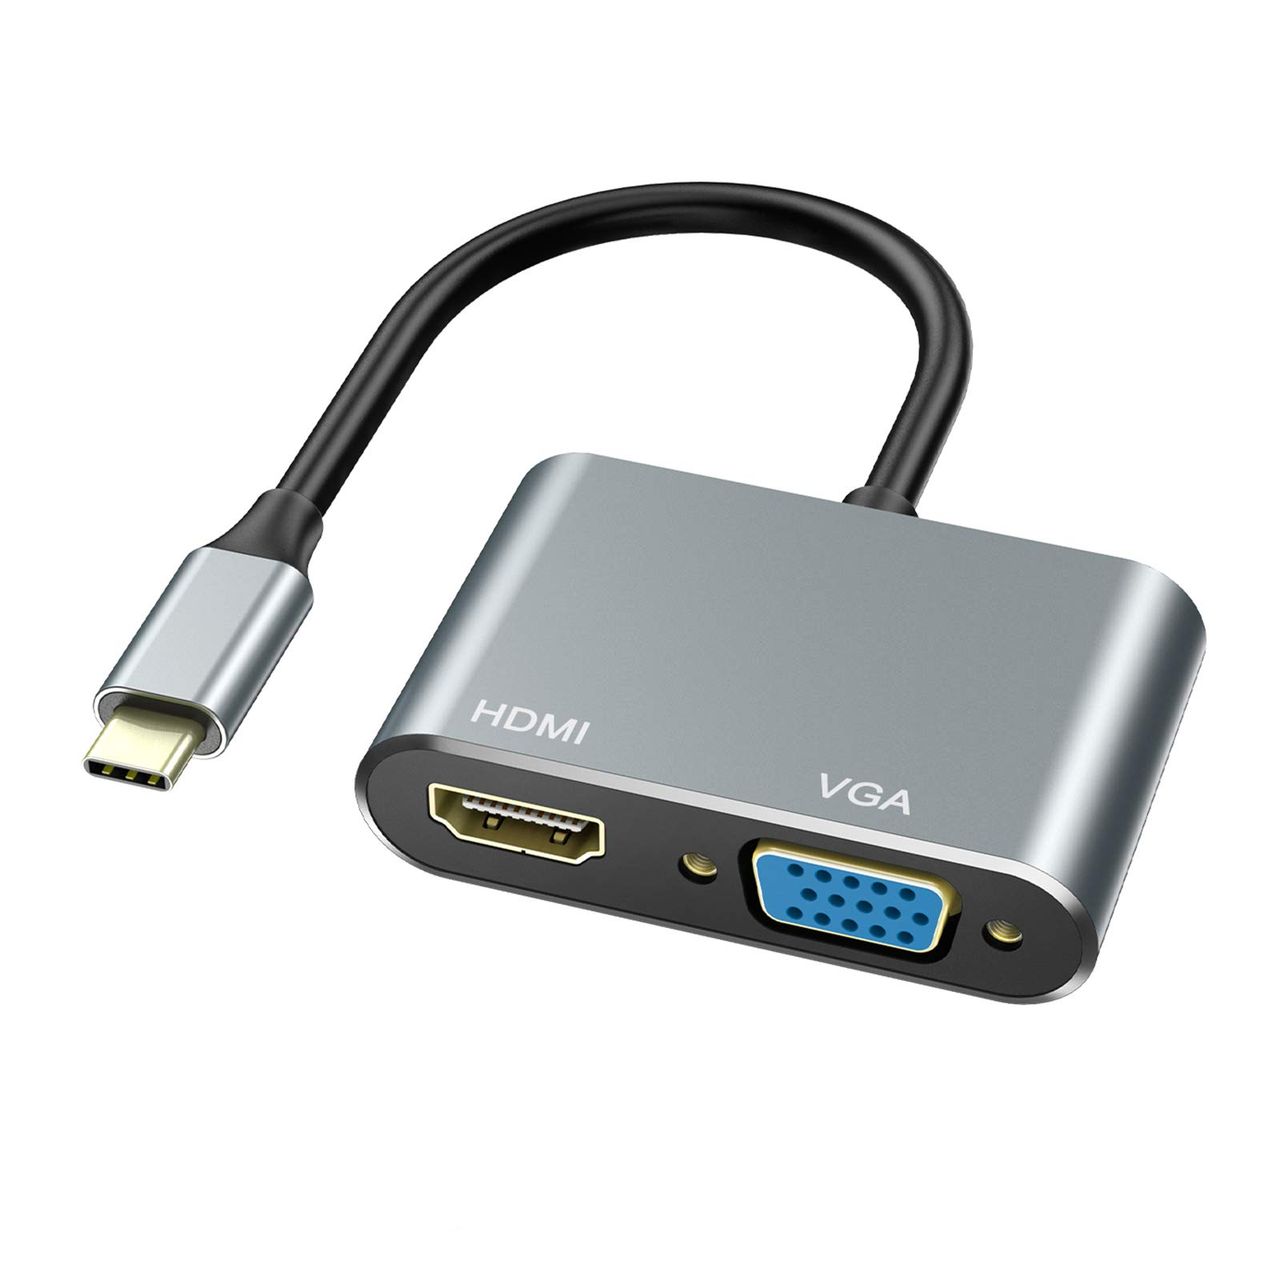 USB Type C to HDMI VGA アダプタ、Vilcome 2 in 1 Thunderbolt 3 to VGA HDMI 4K UHDコンバータ アダプタ MacBook/MacBook Air 13inch 2018/iPad Pro 2018/Surface Go/Book 2/Galaxy S10/USB C デバイス対応 …